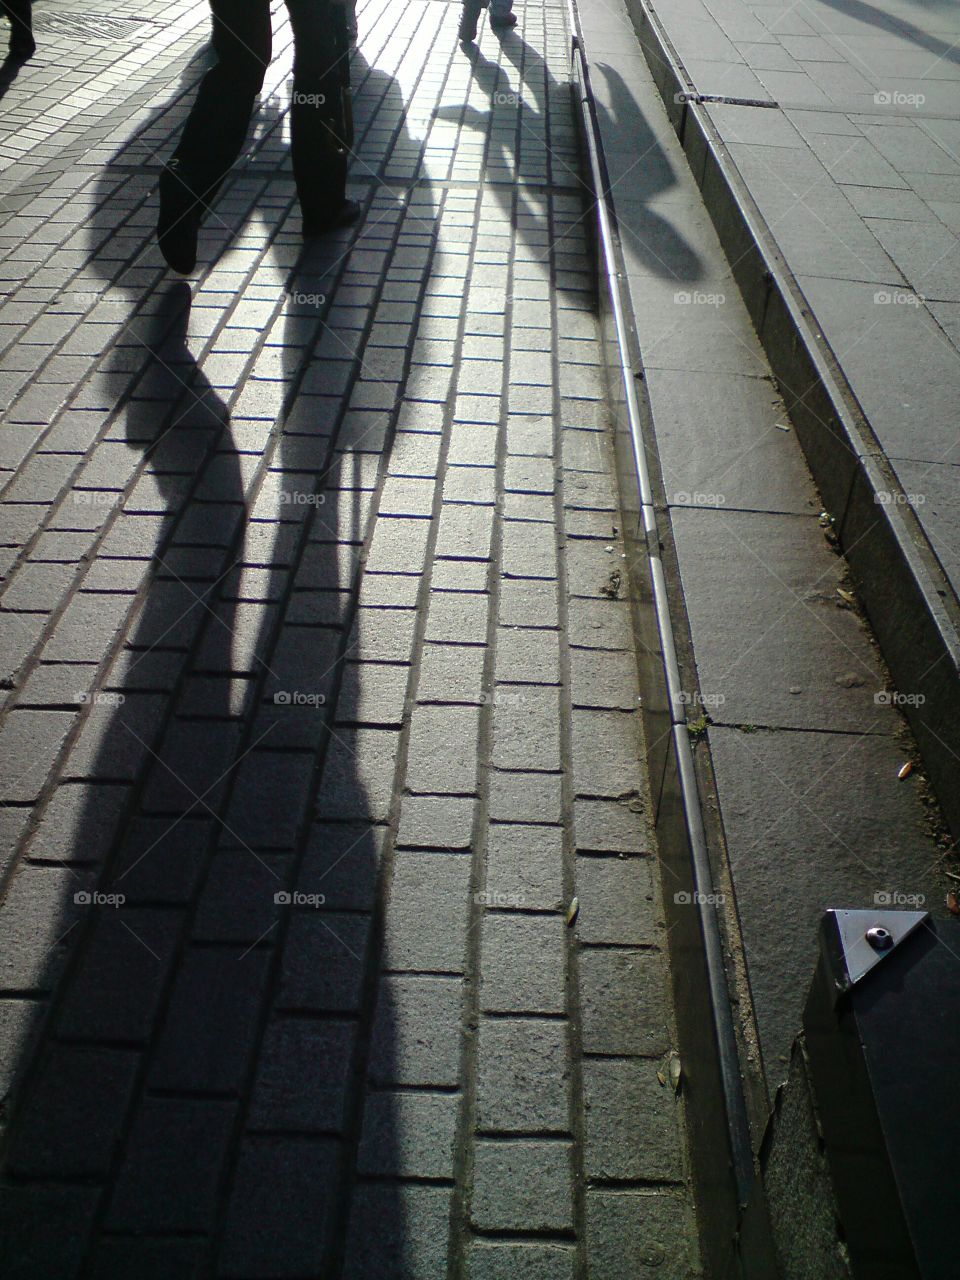 Shadows and steps - London, UK